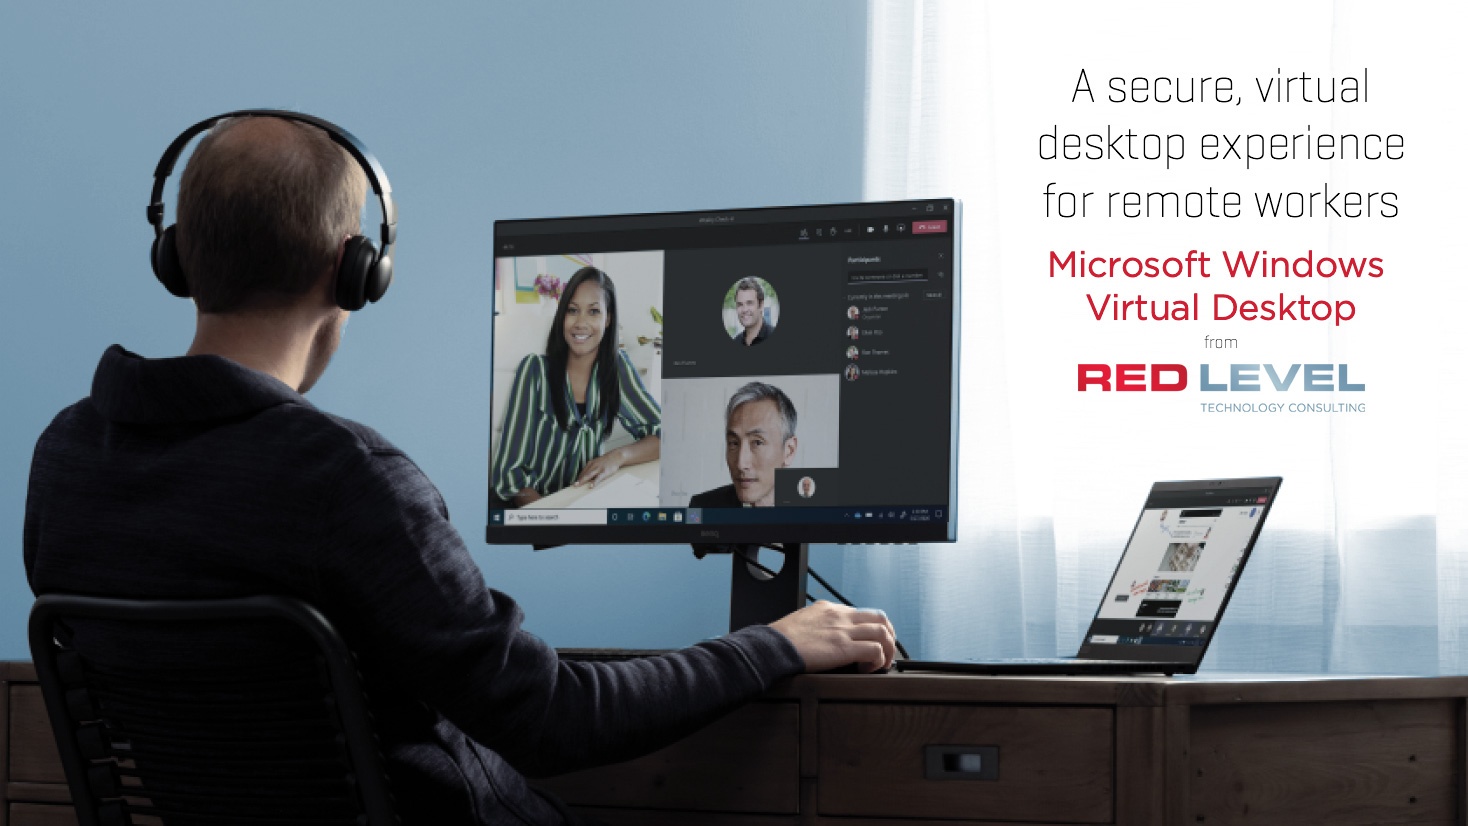 Microsoft Windows Virtual Desktop from Red Level